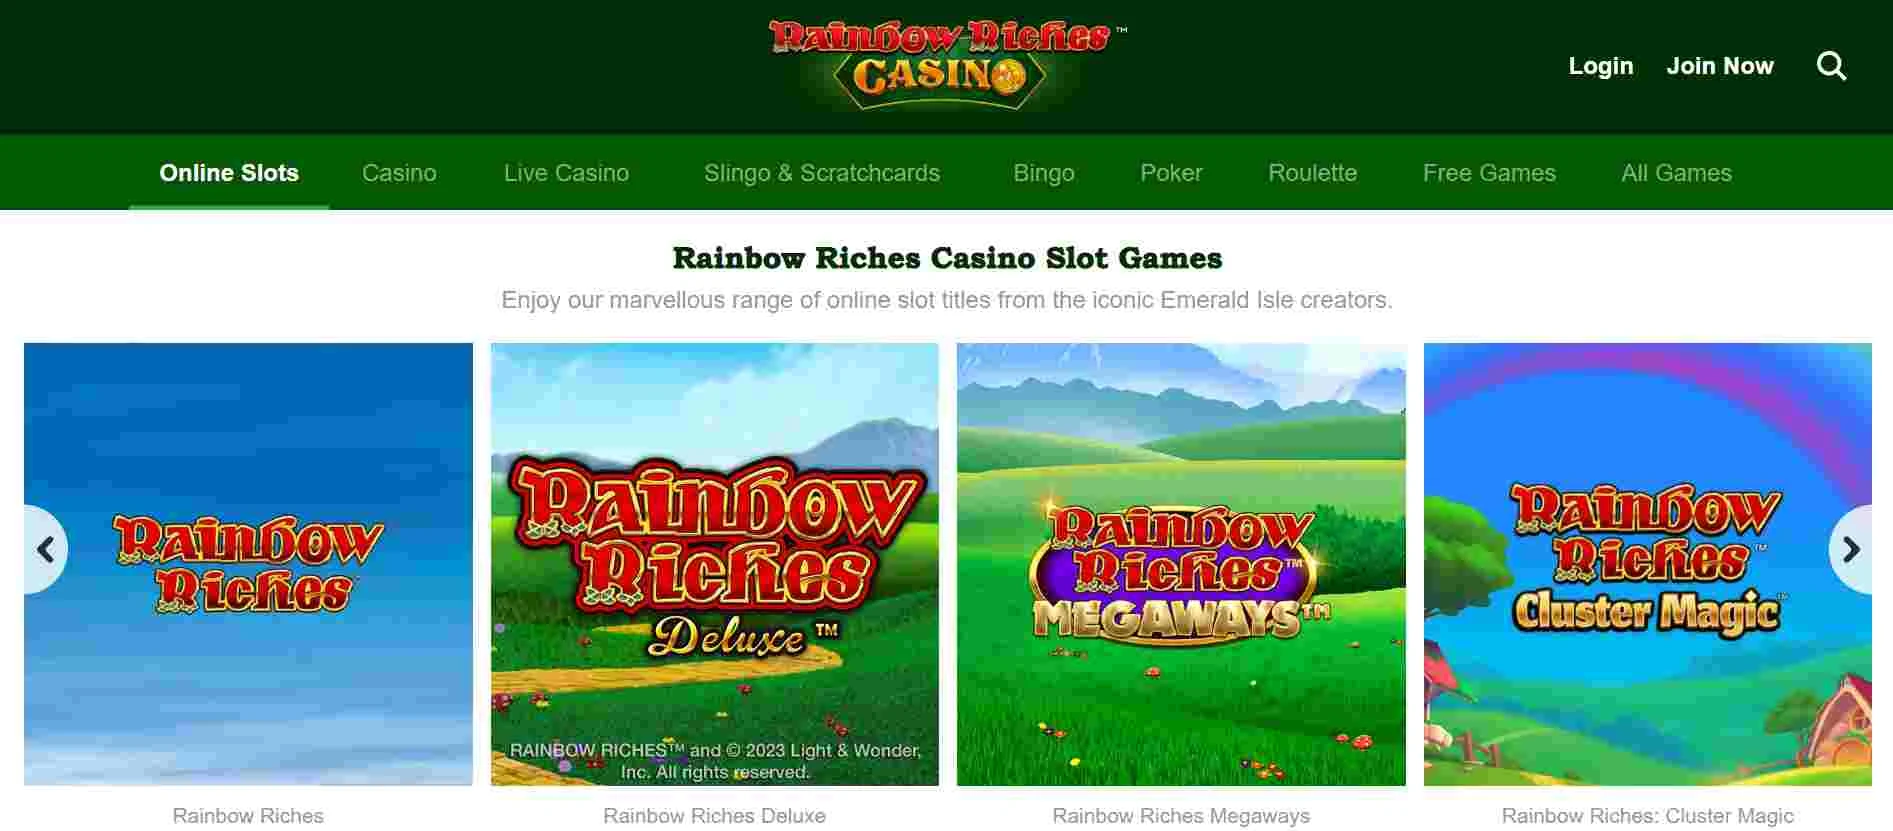 Rainbow Riches Casino Slot Games